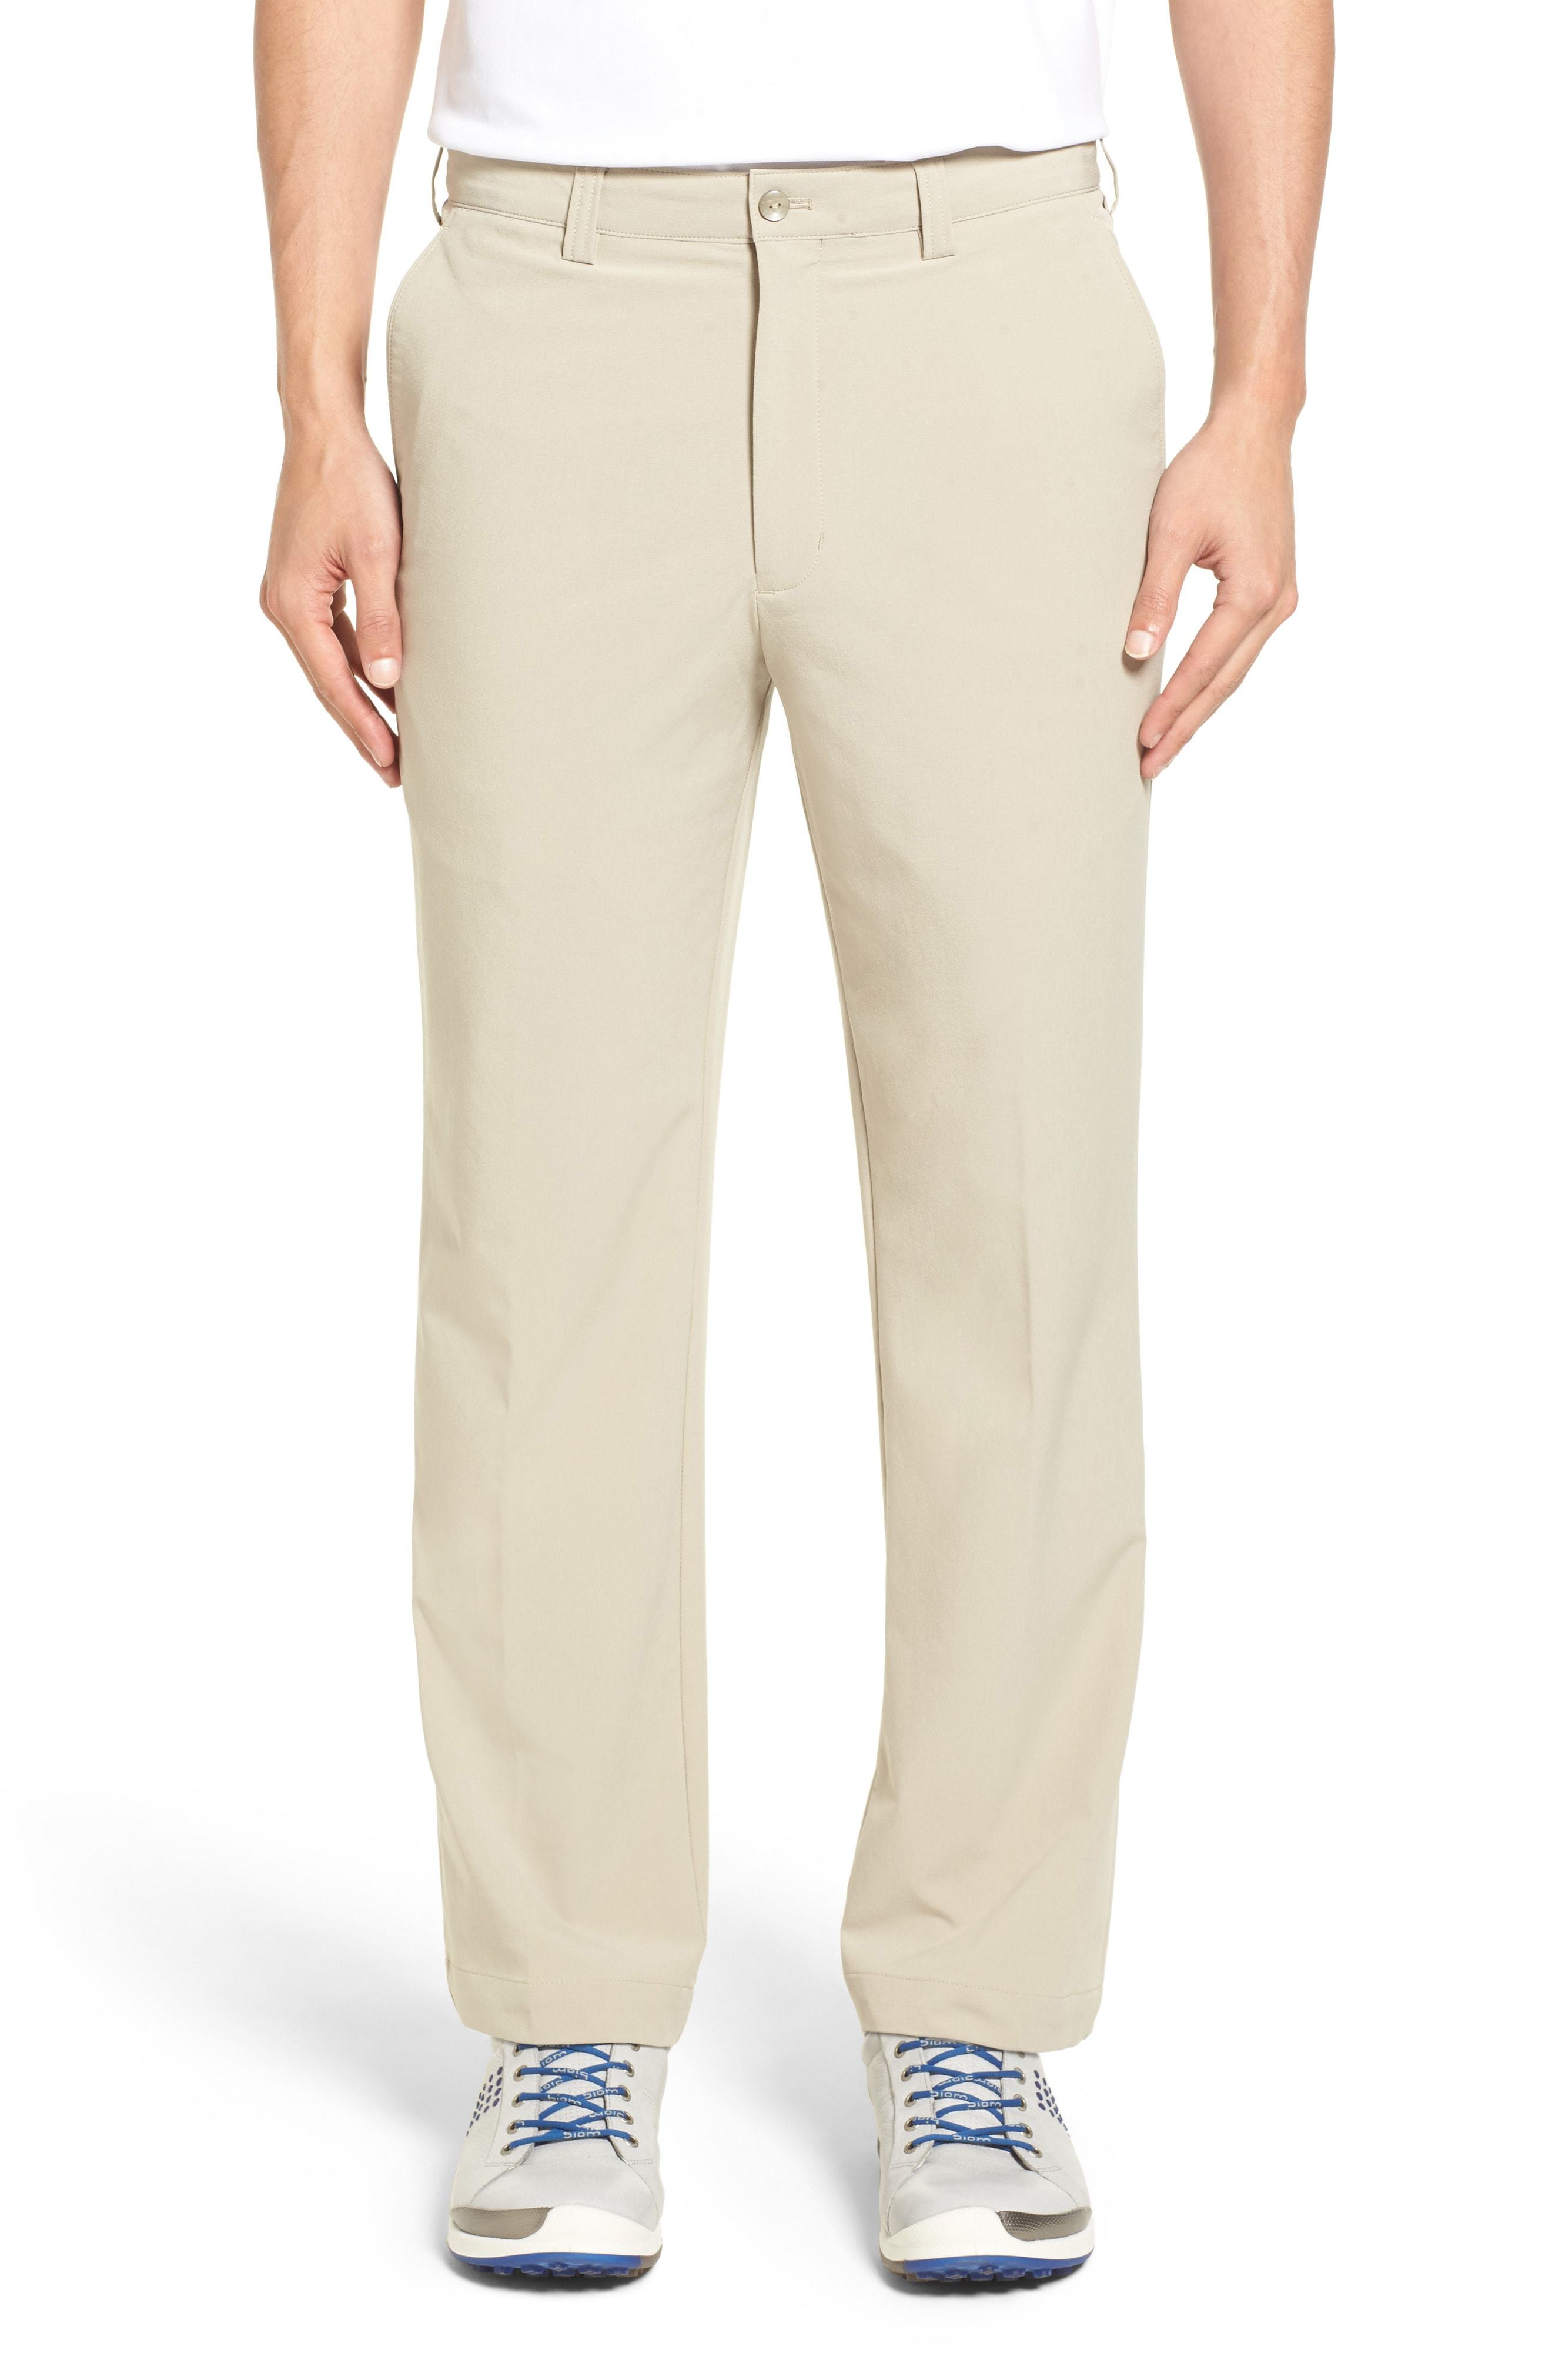 Cutter & Buck Bainbridge Drytec Pants, $96 | Nordstrom | Lookastic.com